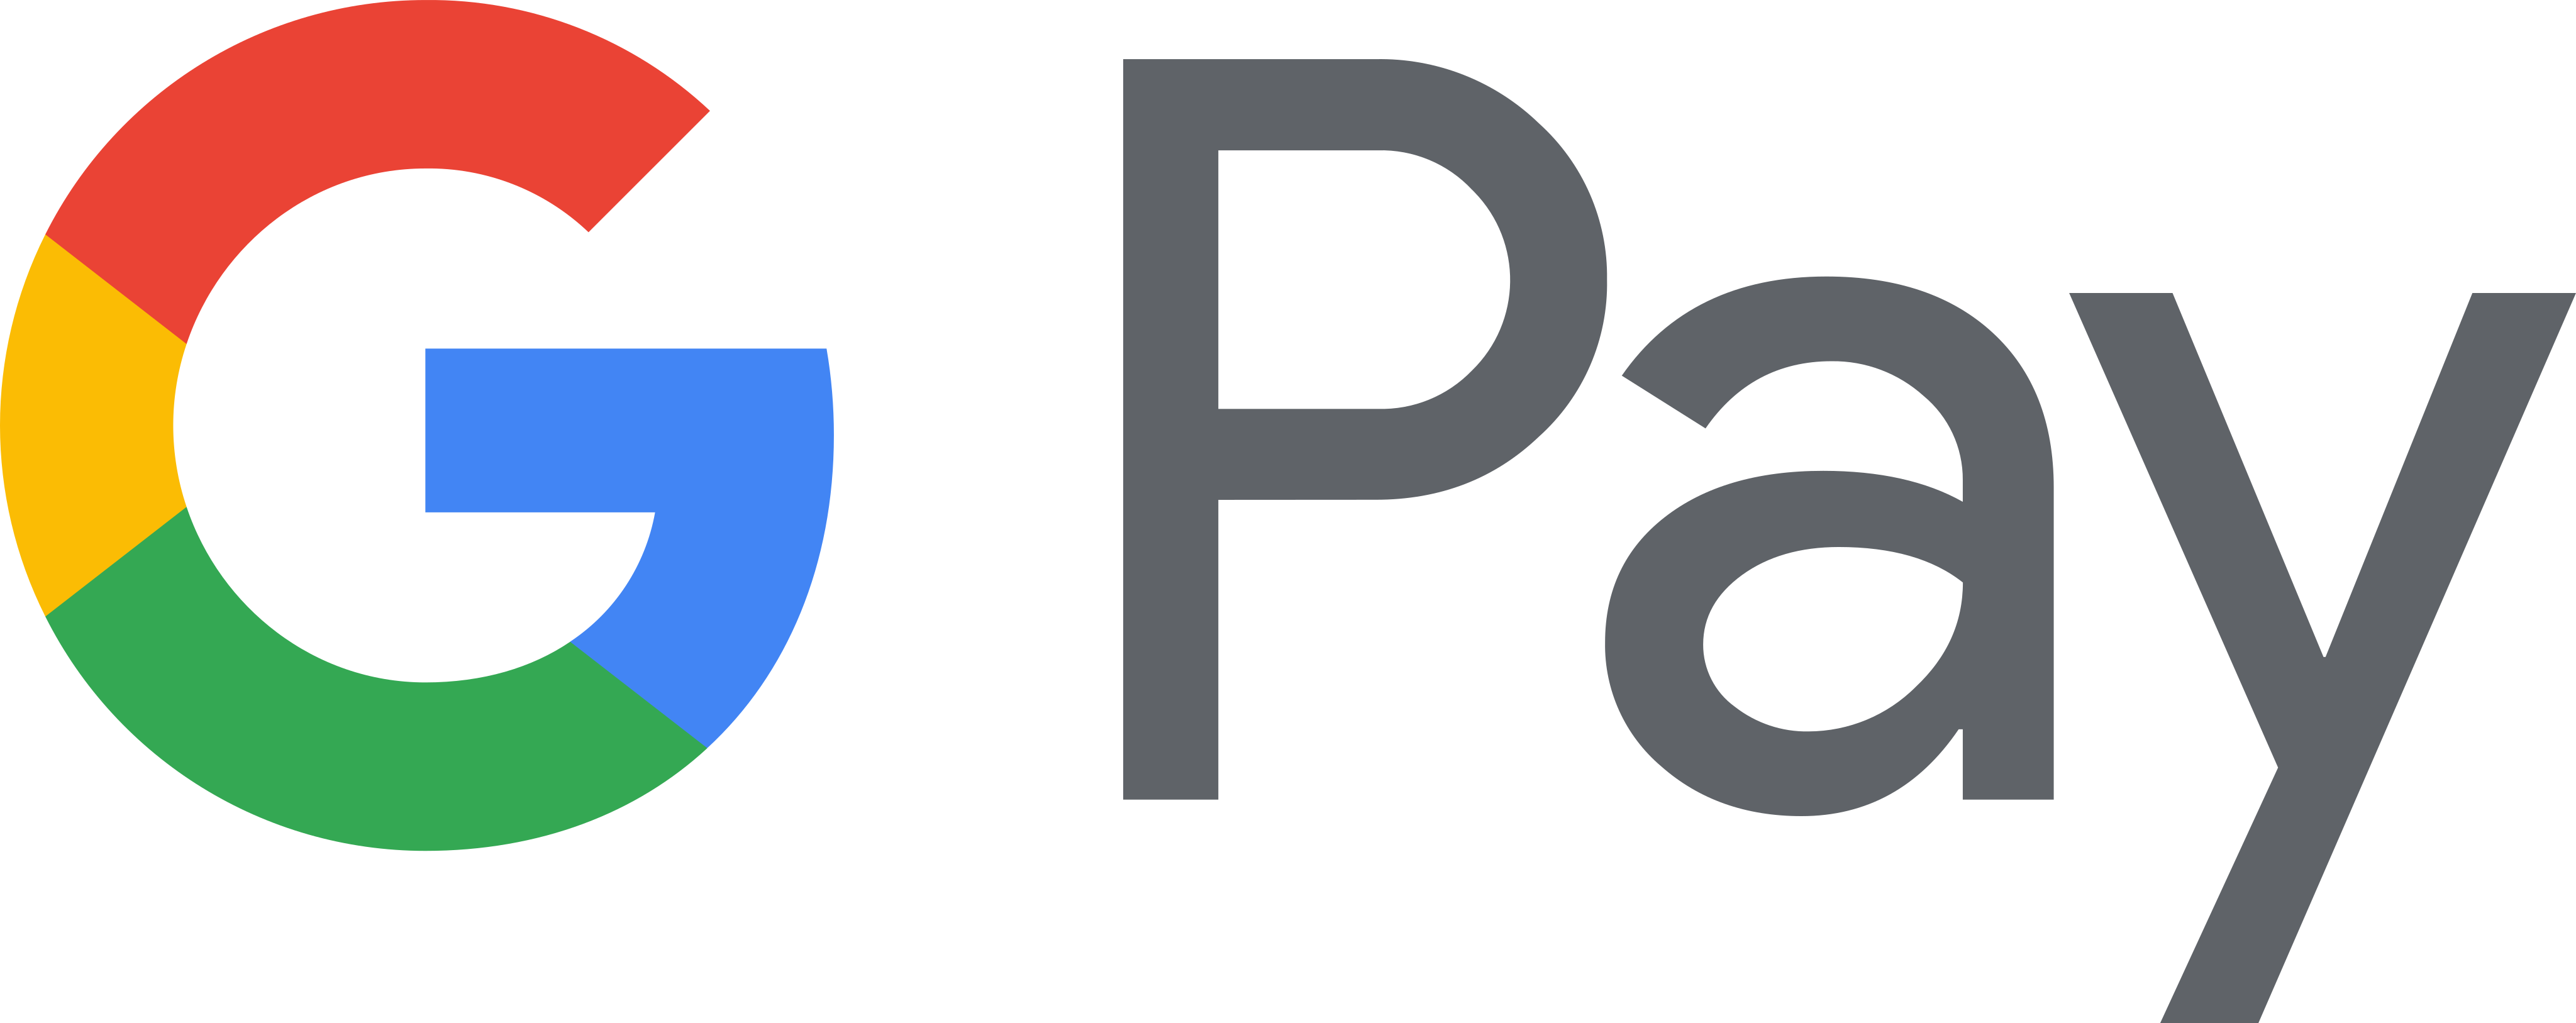 Google Pay Logo Png And Vector Logo Download